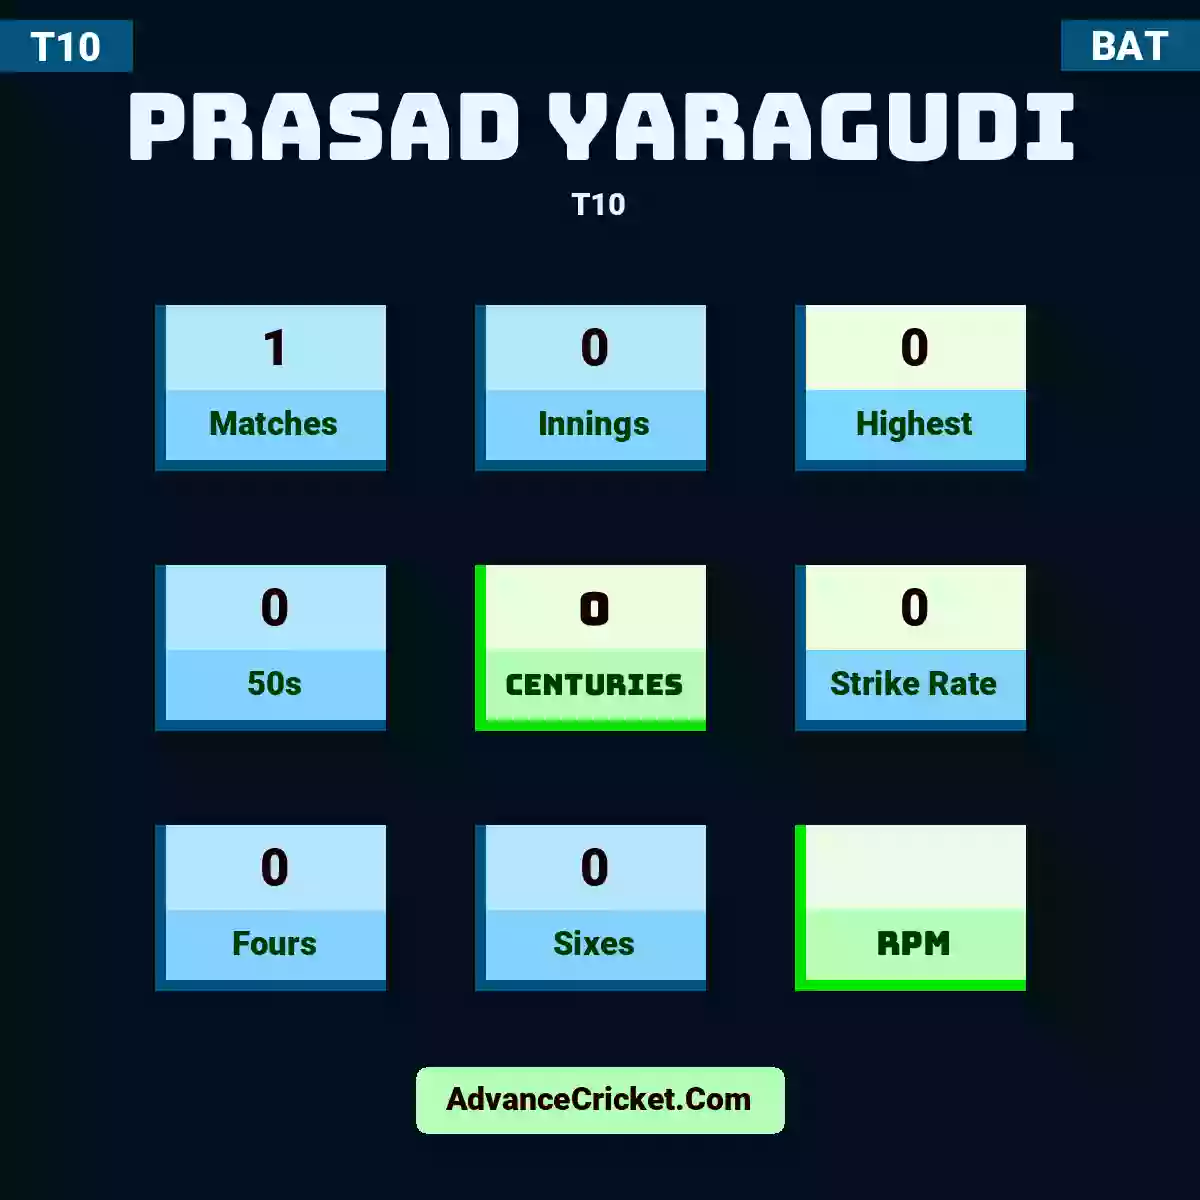 Prasad Yaragudi T10 , Prasad Yaragudi played 1 matches, scored 0 runs as highest, 0 half-centuries, and 0 centuries, with a strike rate of 0. P.Yaragudi hit 0 fours and 0 sixes.